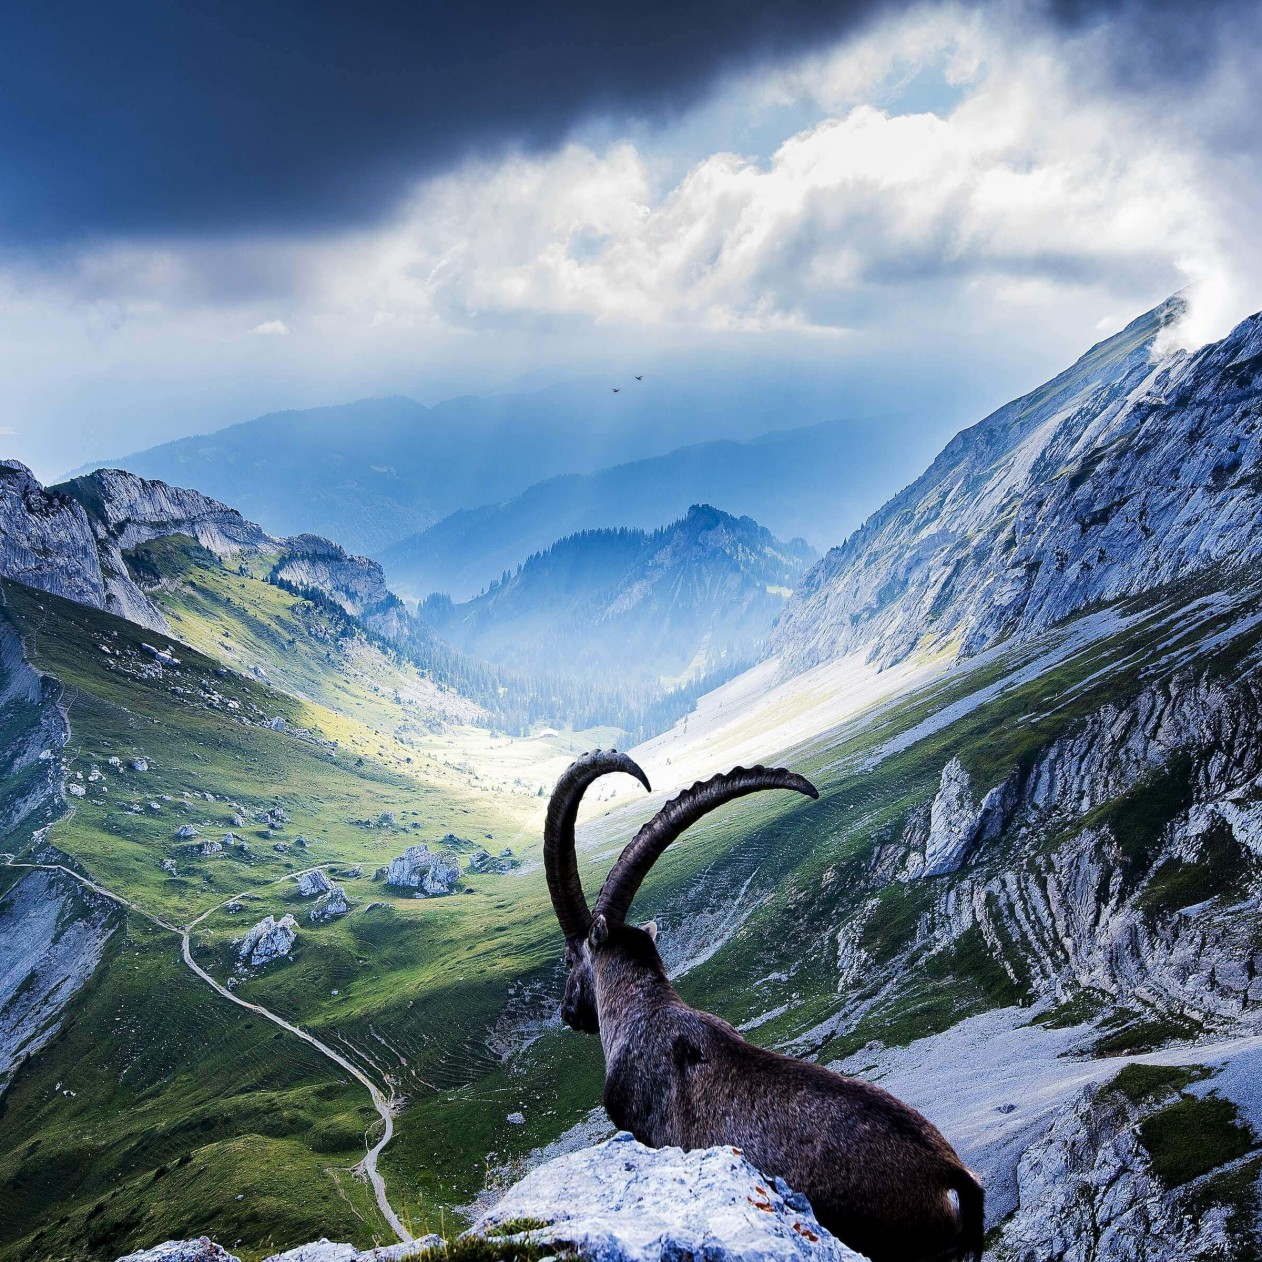 Goat at Pilatus, Switzerland Wallpaper for Apple iPad mini